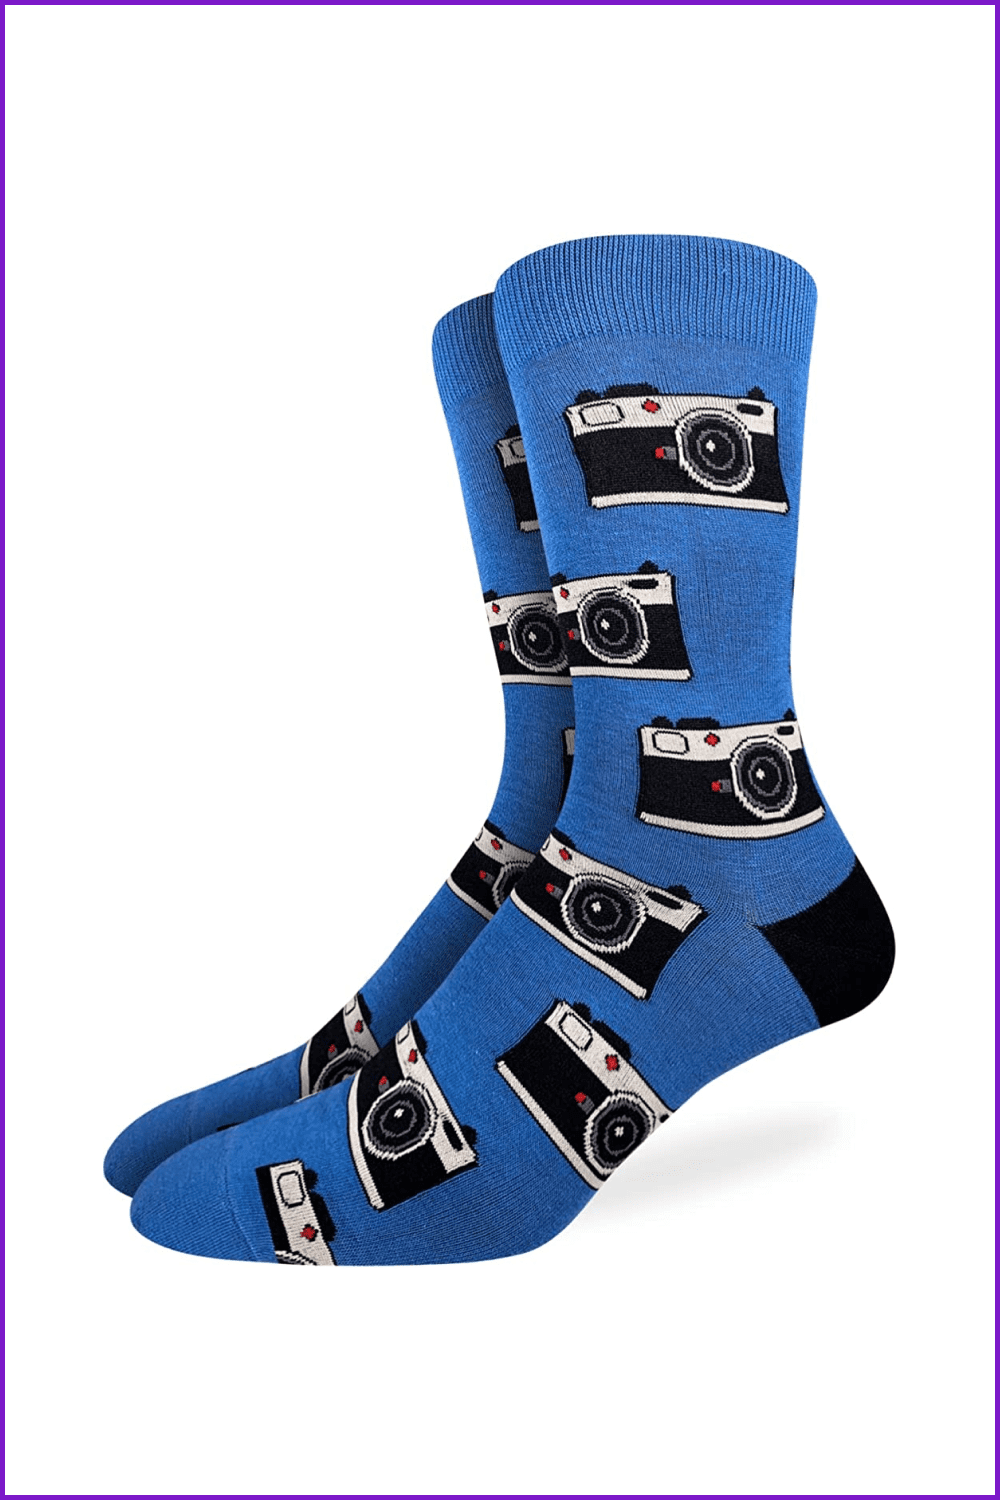 Photo of blue socks depicting cameras on them.